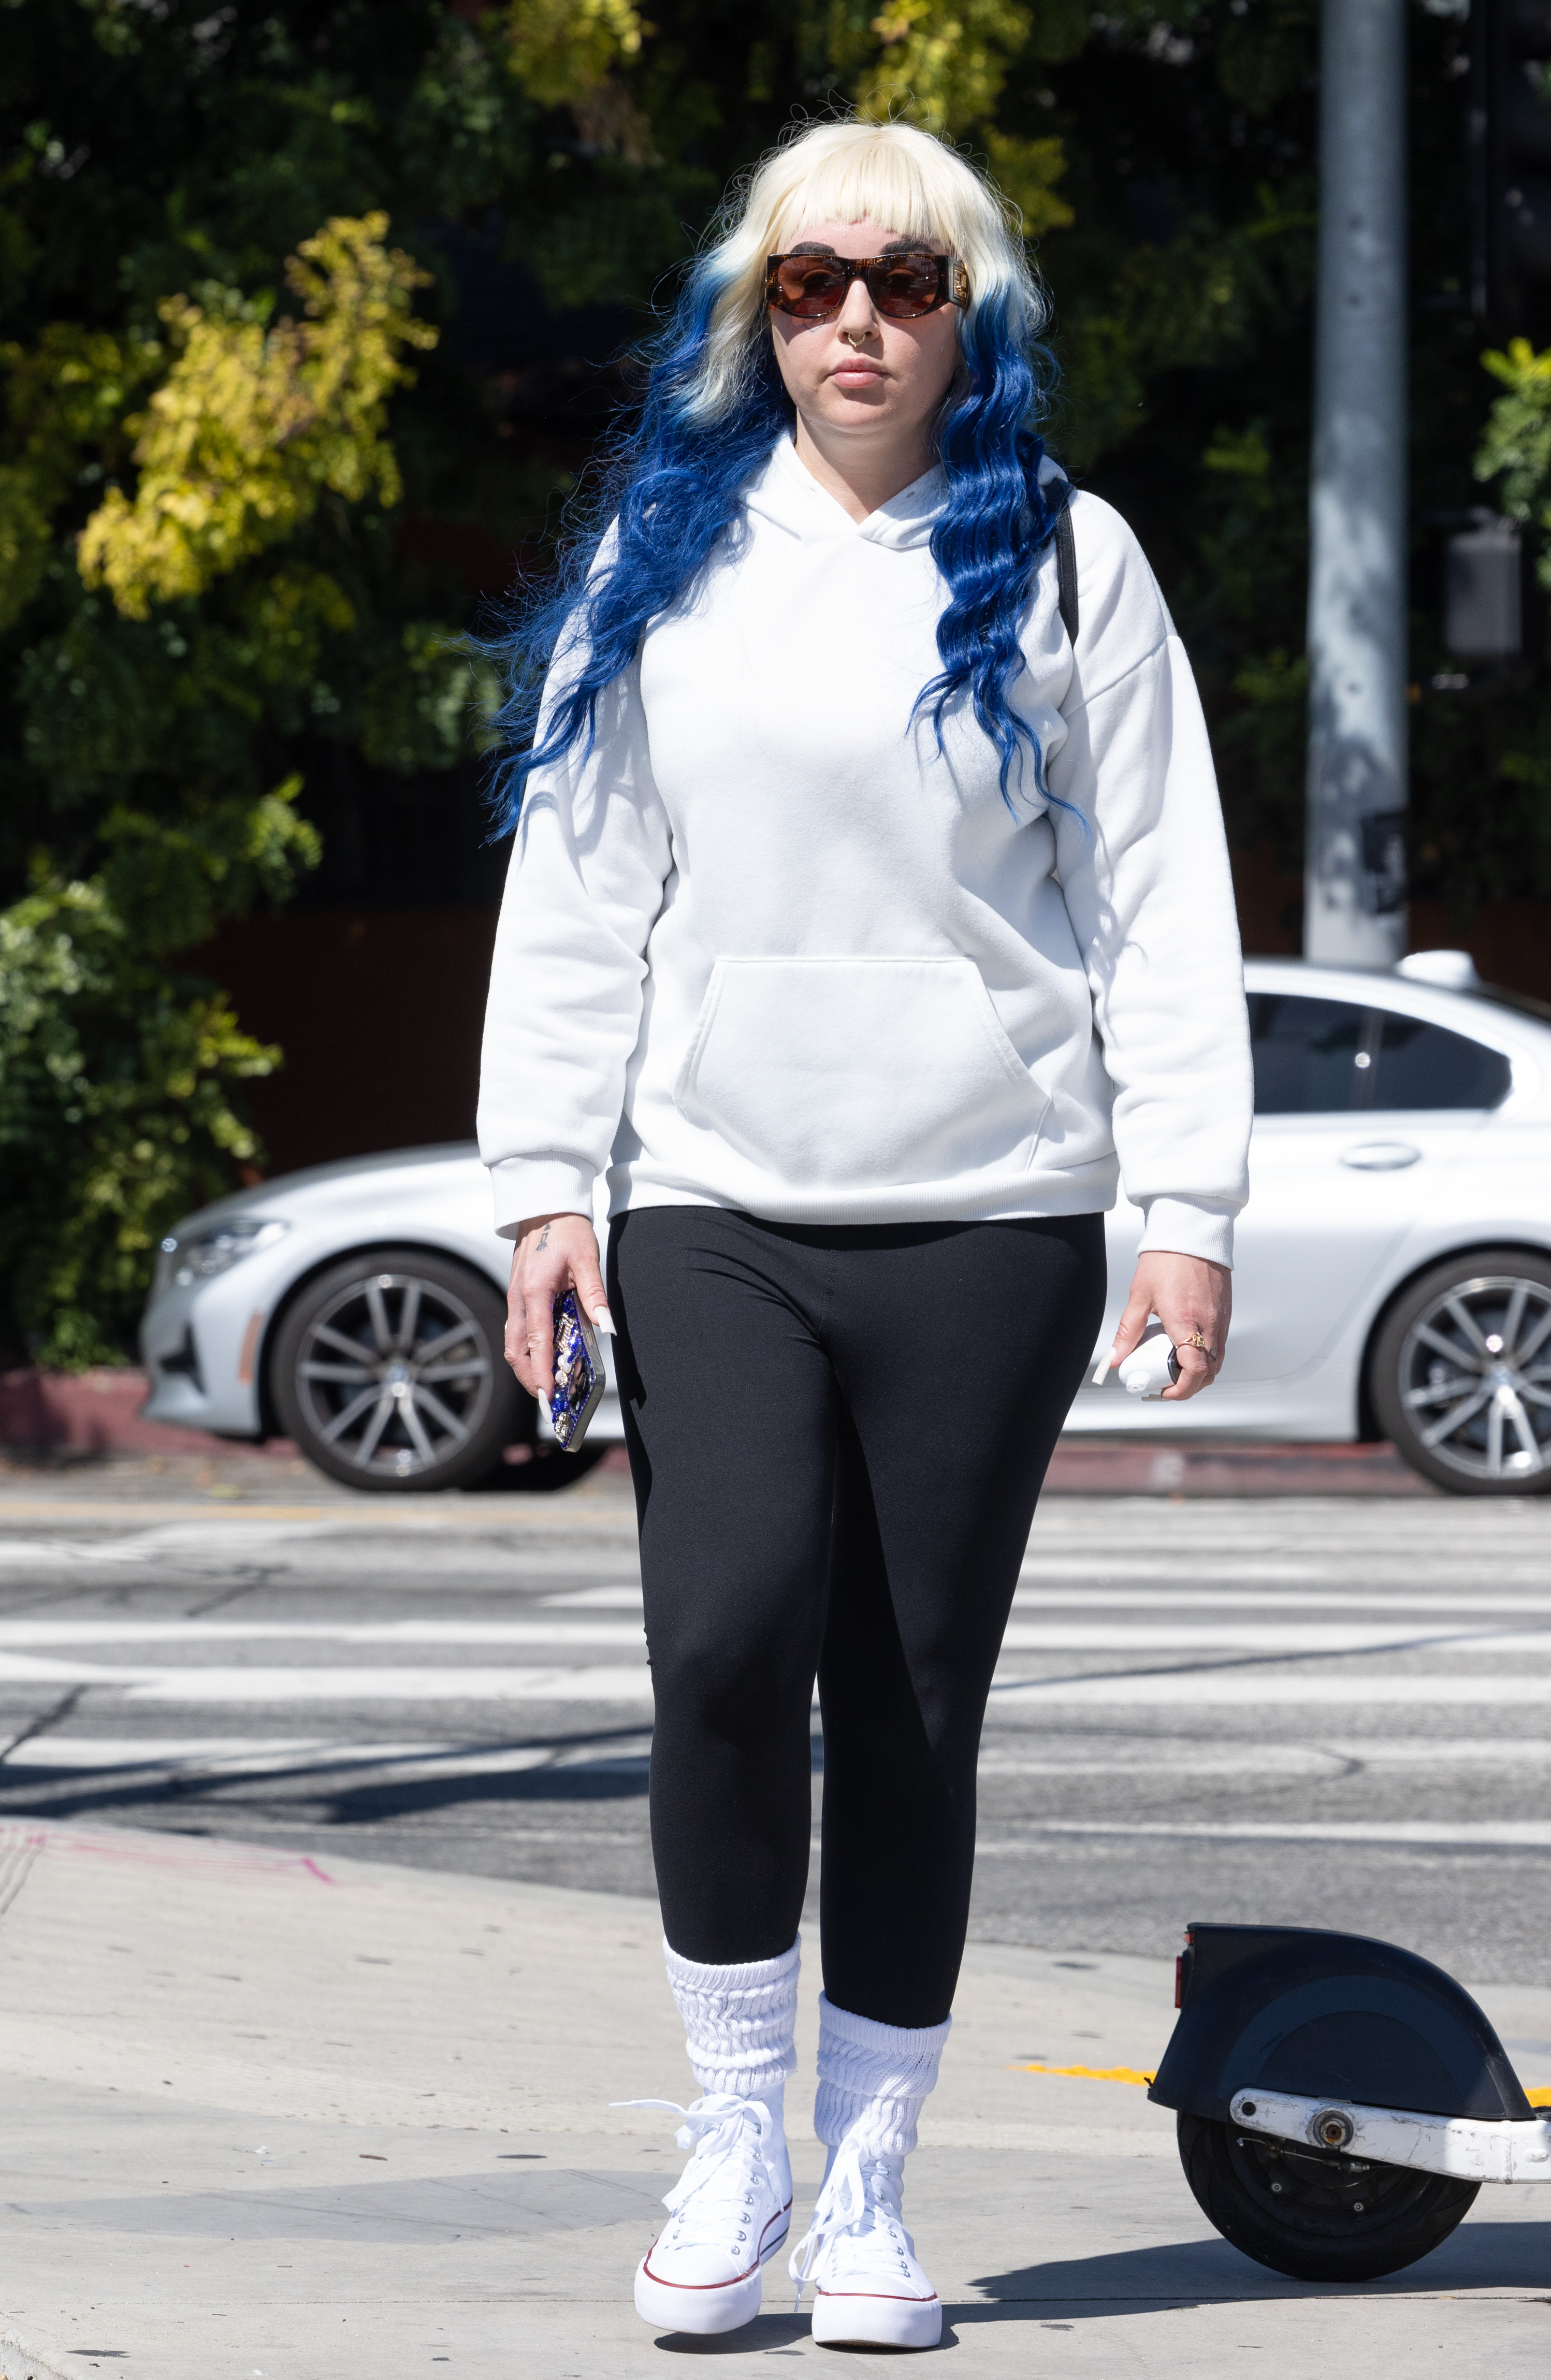 Amanda took a walk around Los Angeles